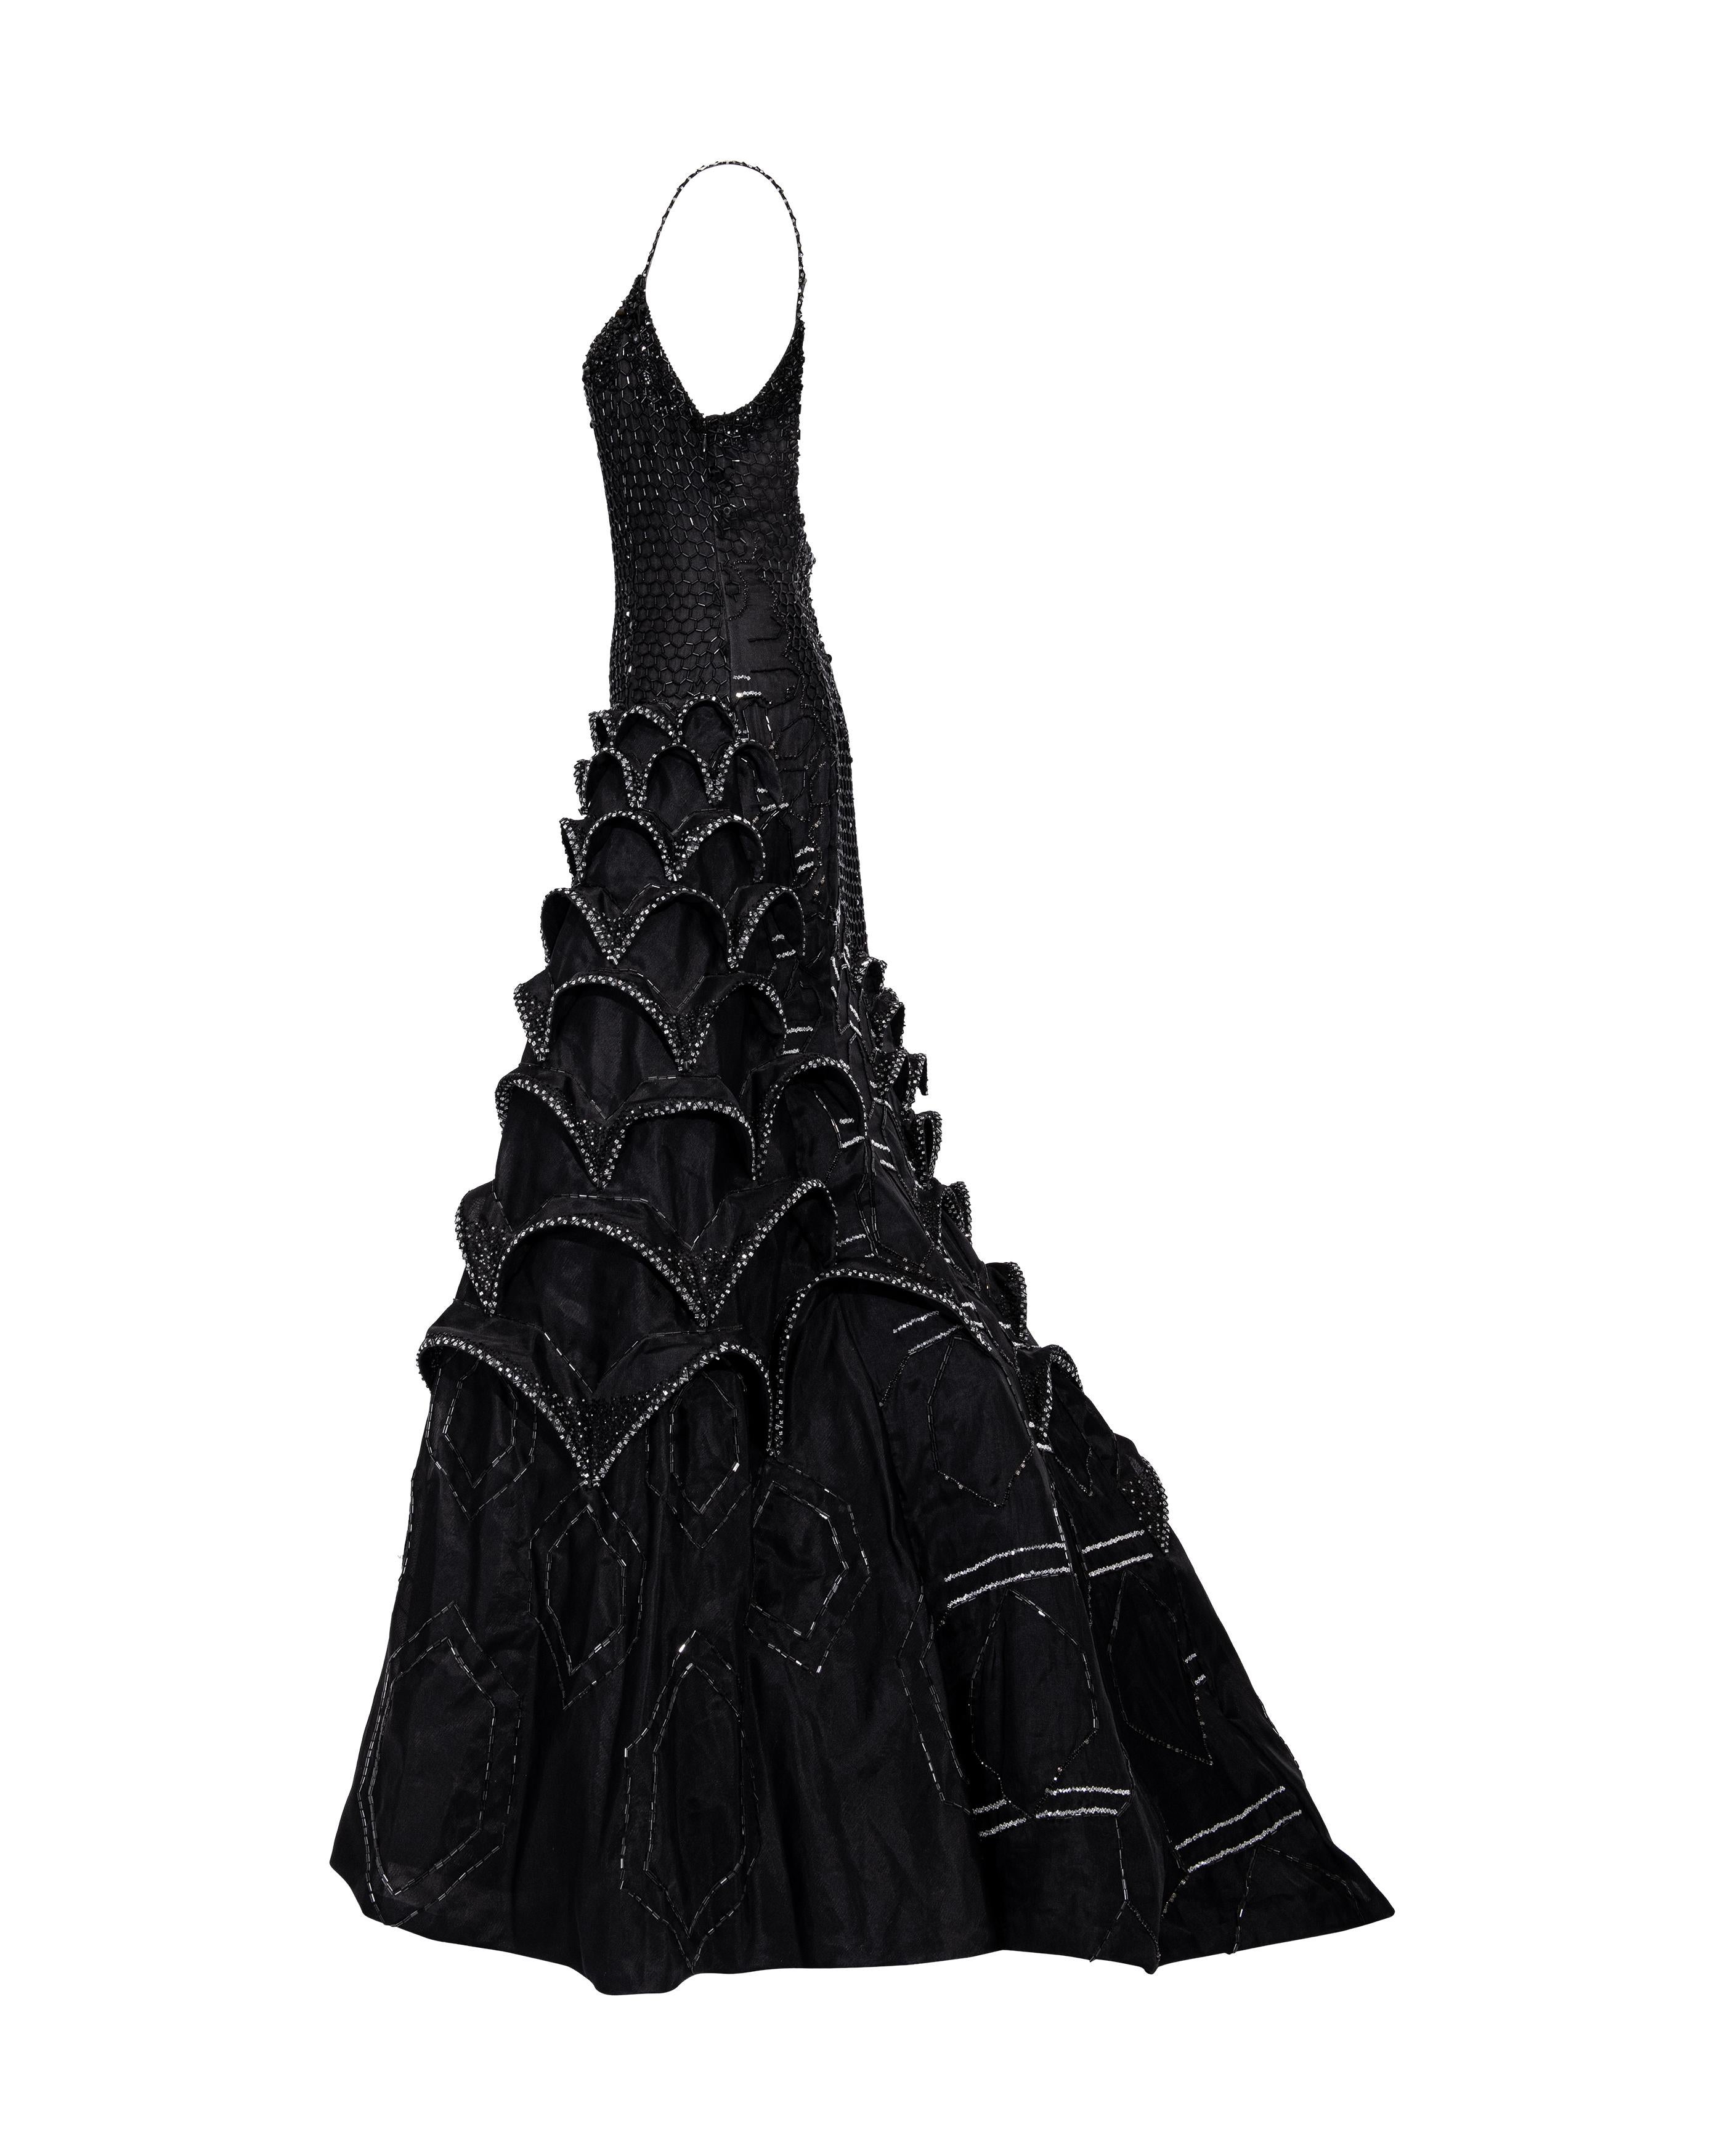 Women's S/S 1999 Atelier Versace Haute Couture Black Embellished Sculptural Gown